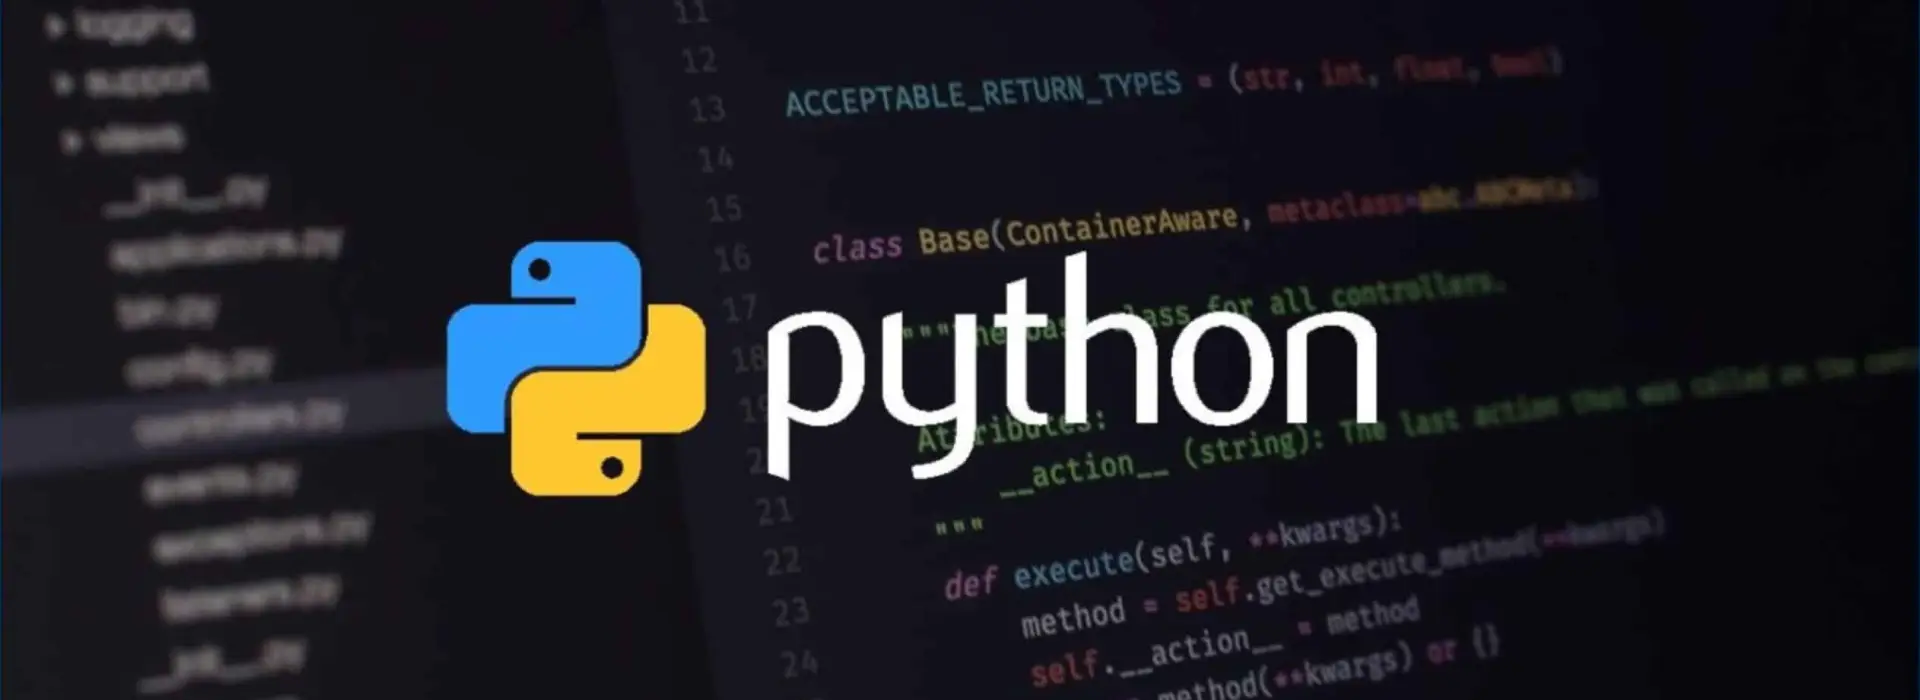 Python Development company Australia